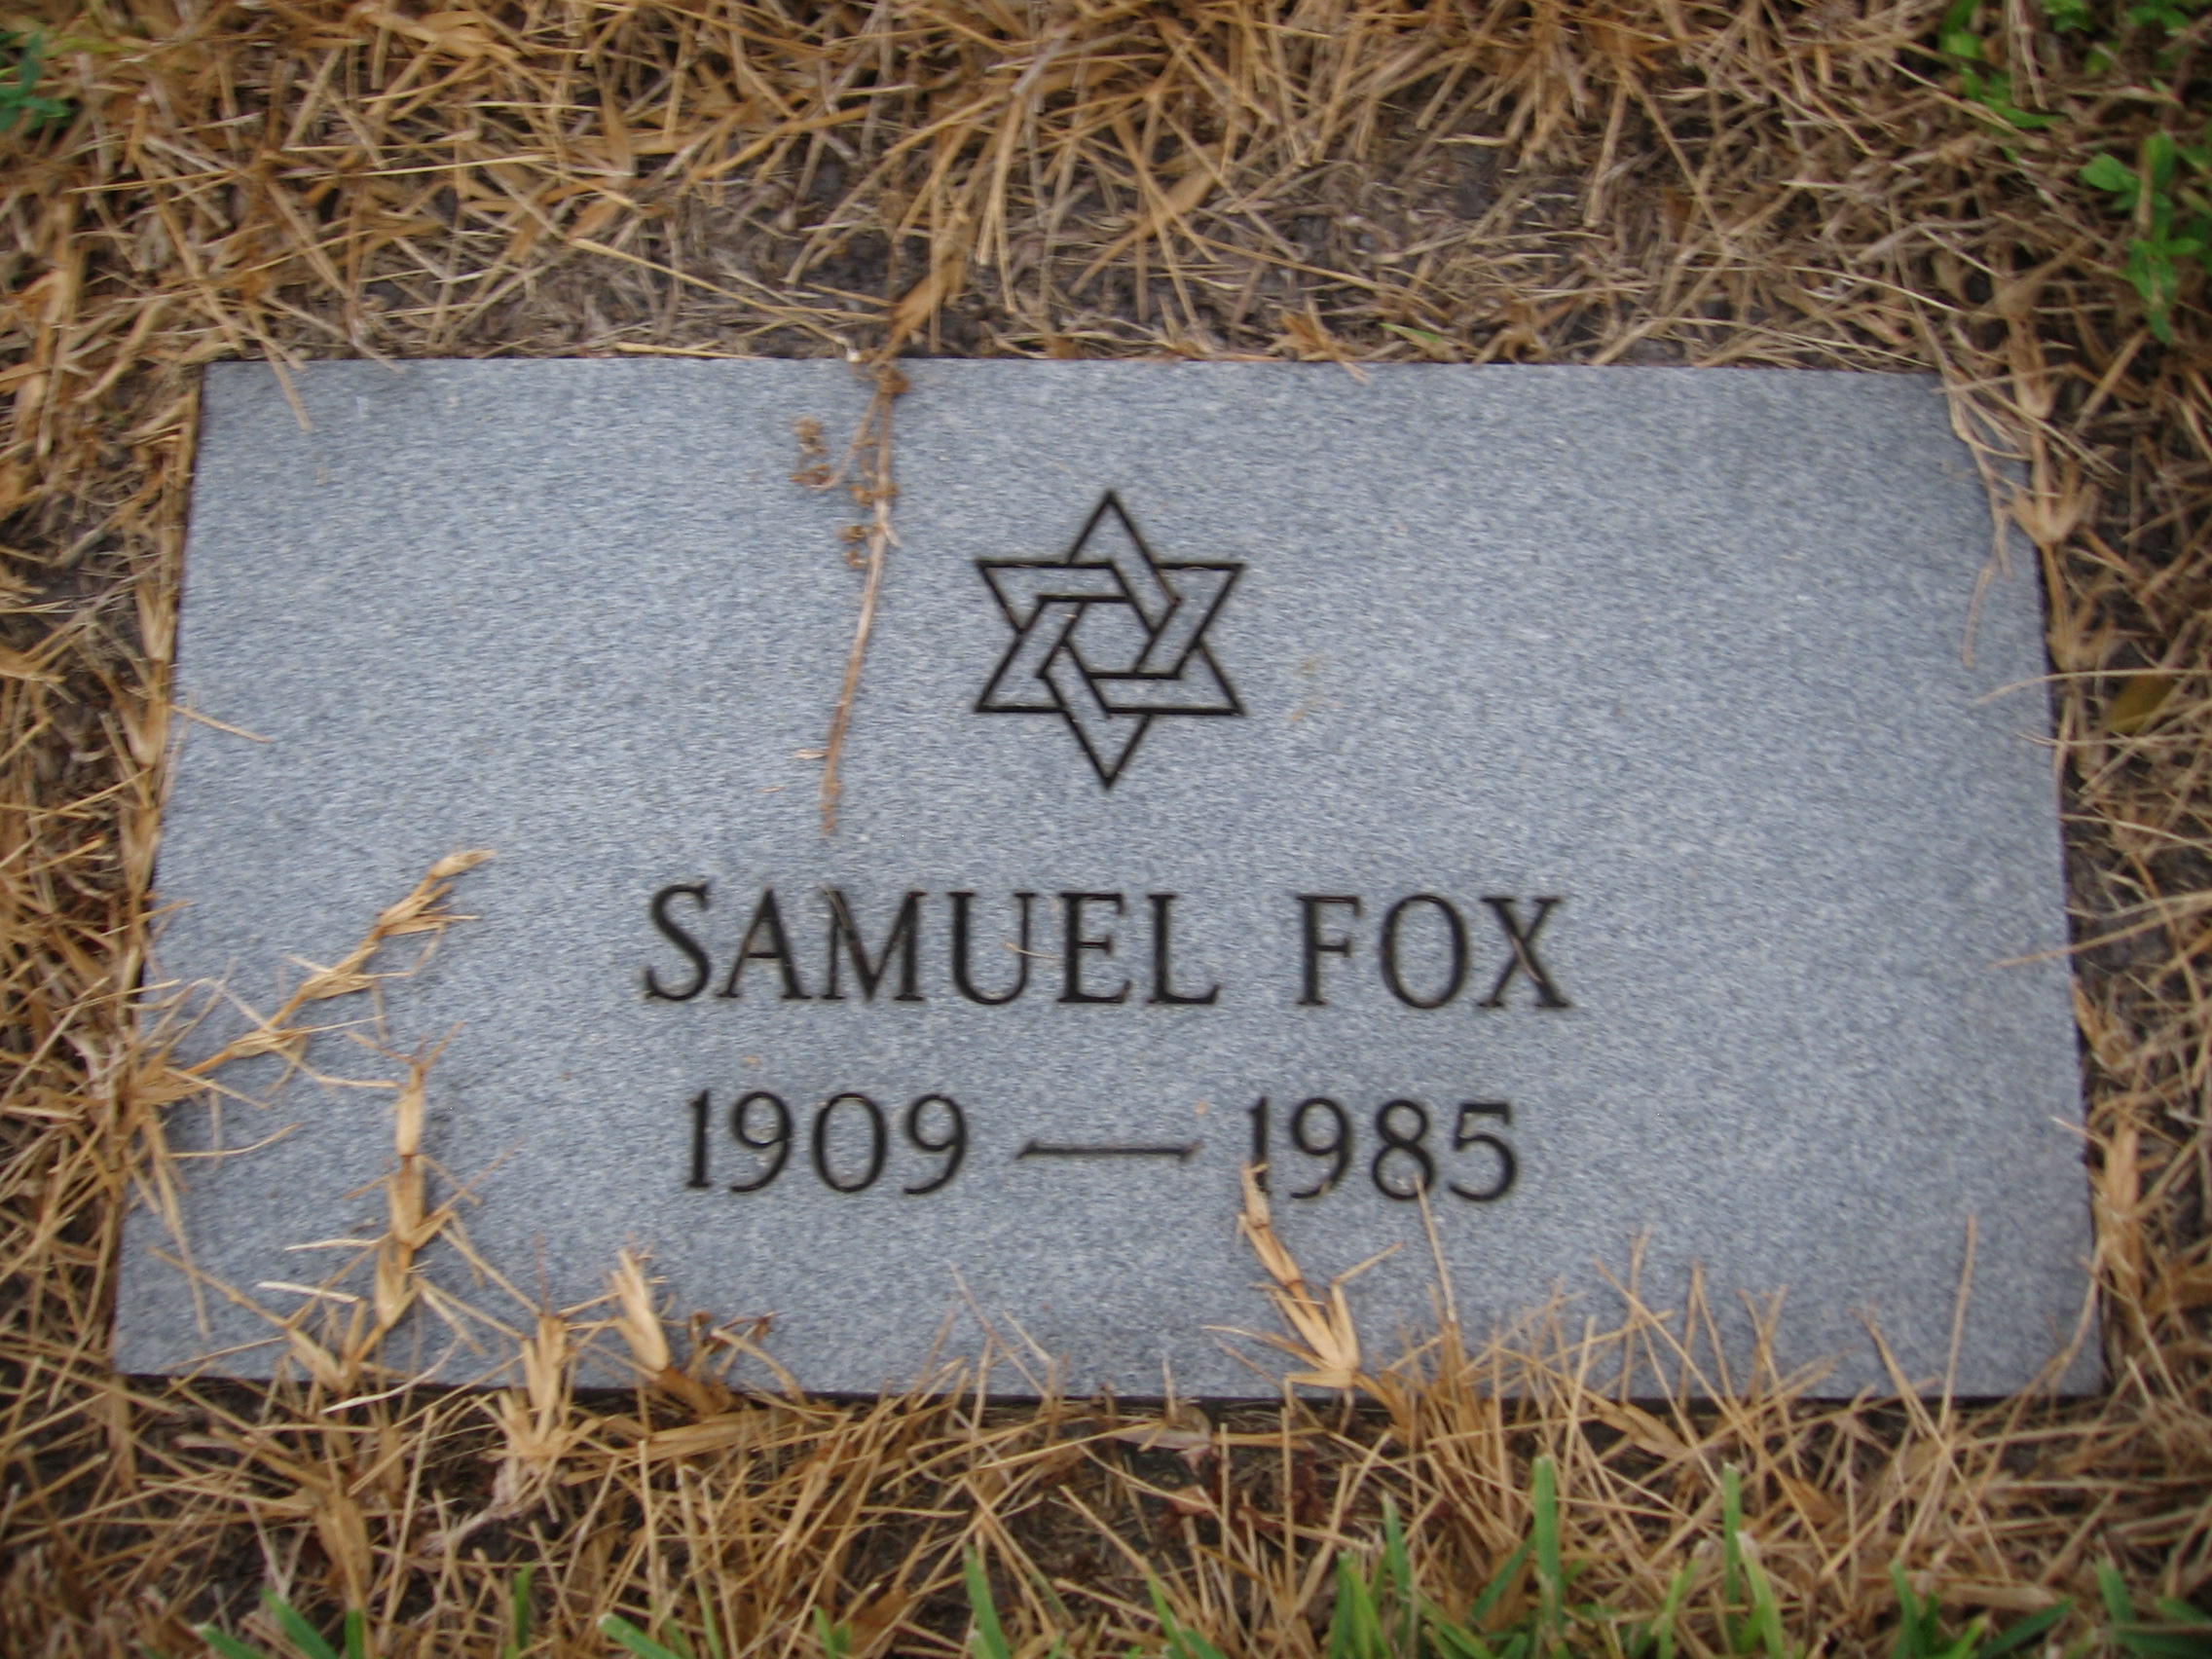 Samuel Fox